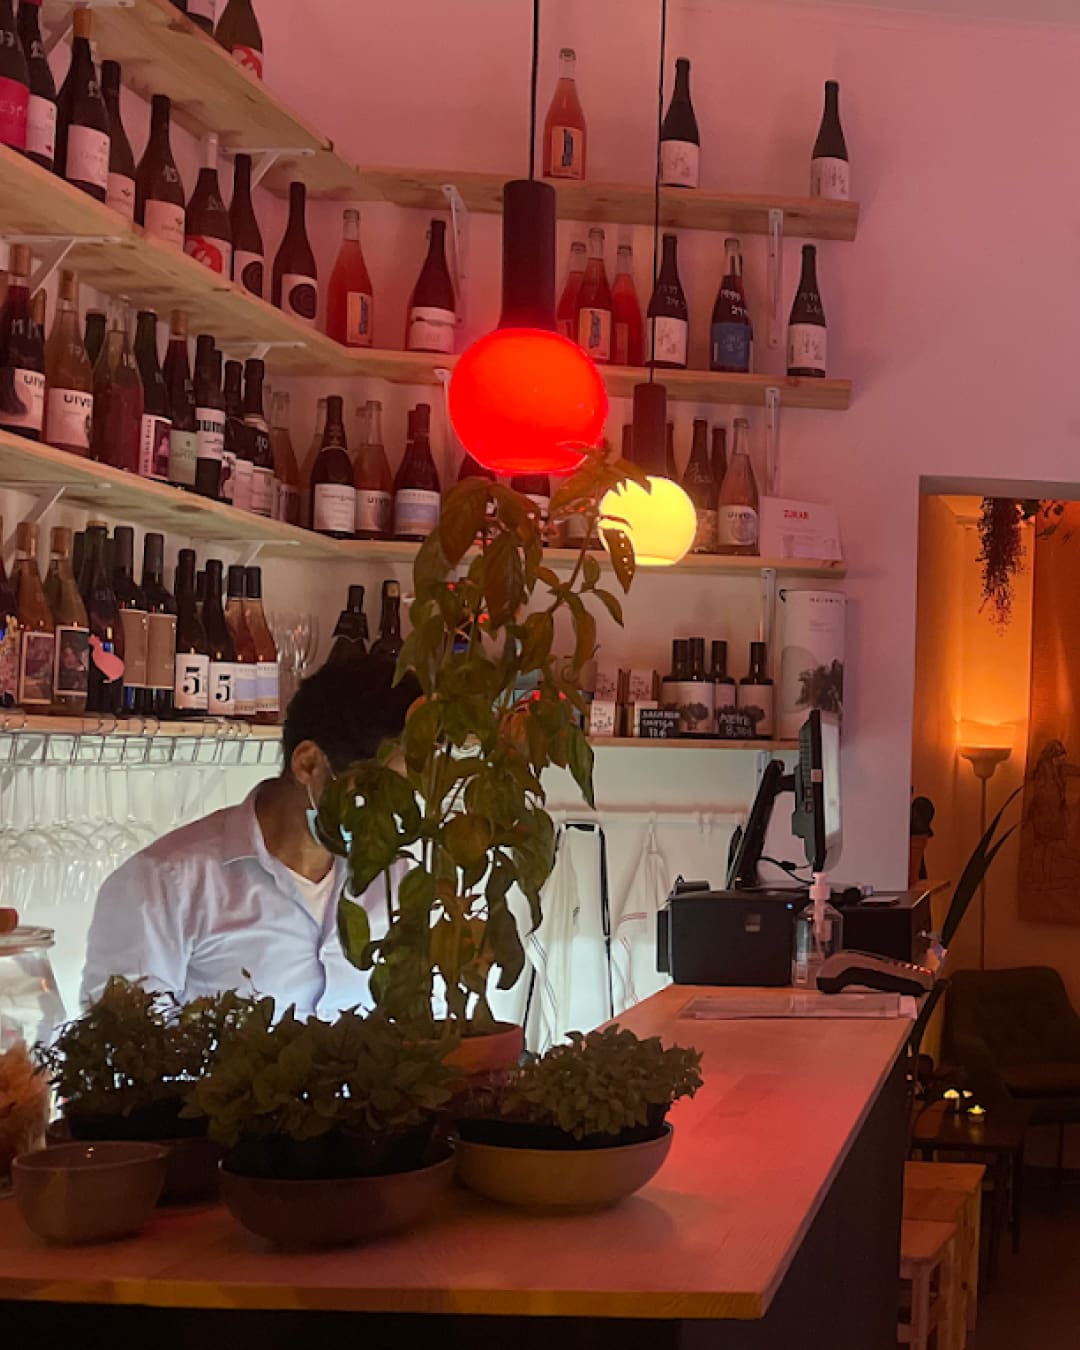 The best bars in Lisbon | A Viagem das Horas